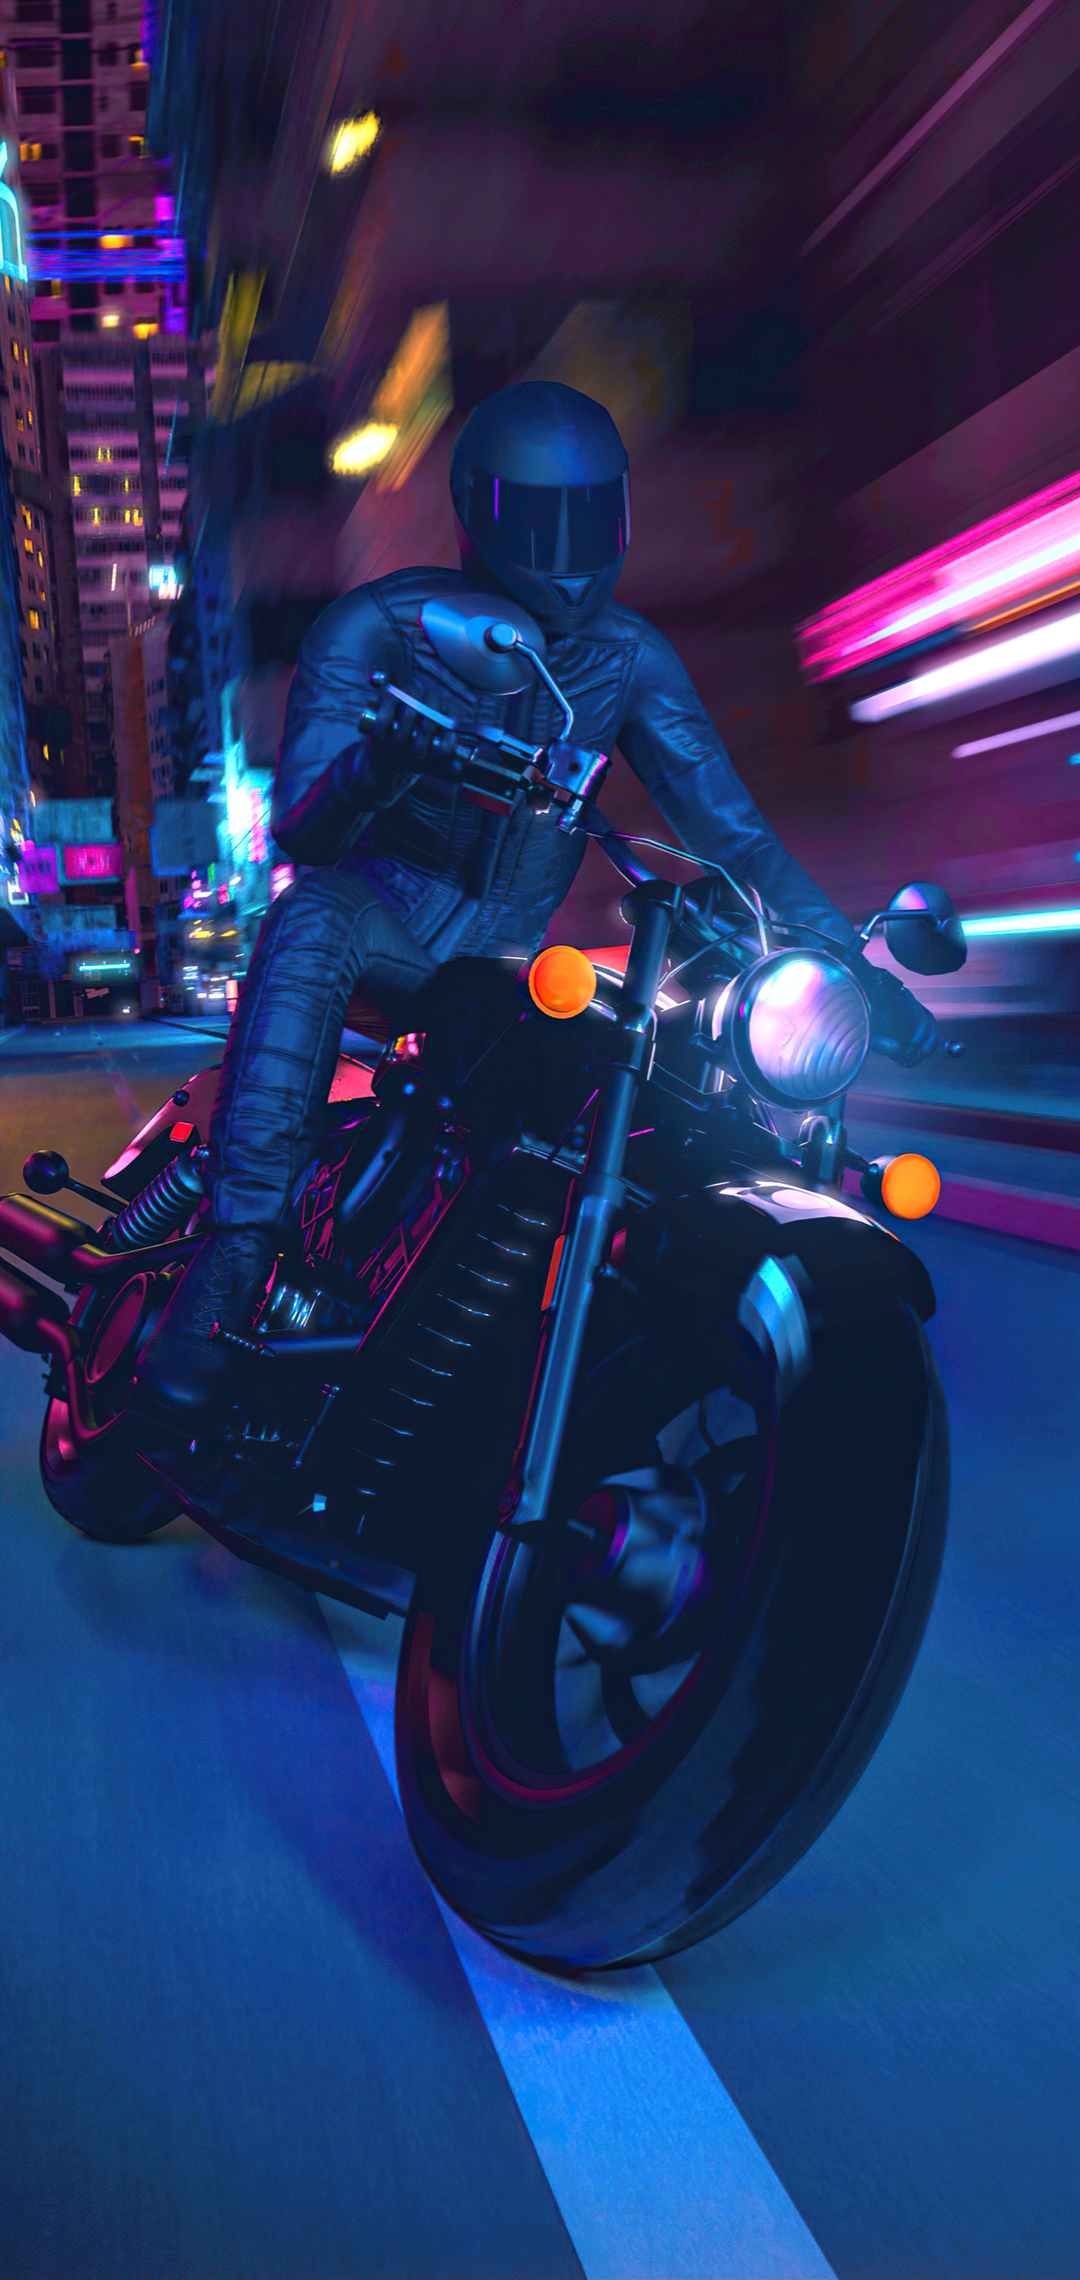 motor-biker-in-city-ri.jpg